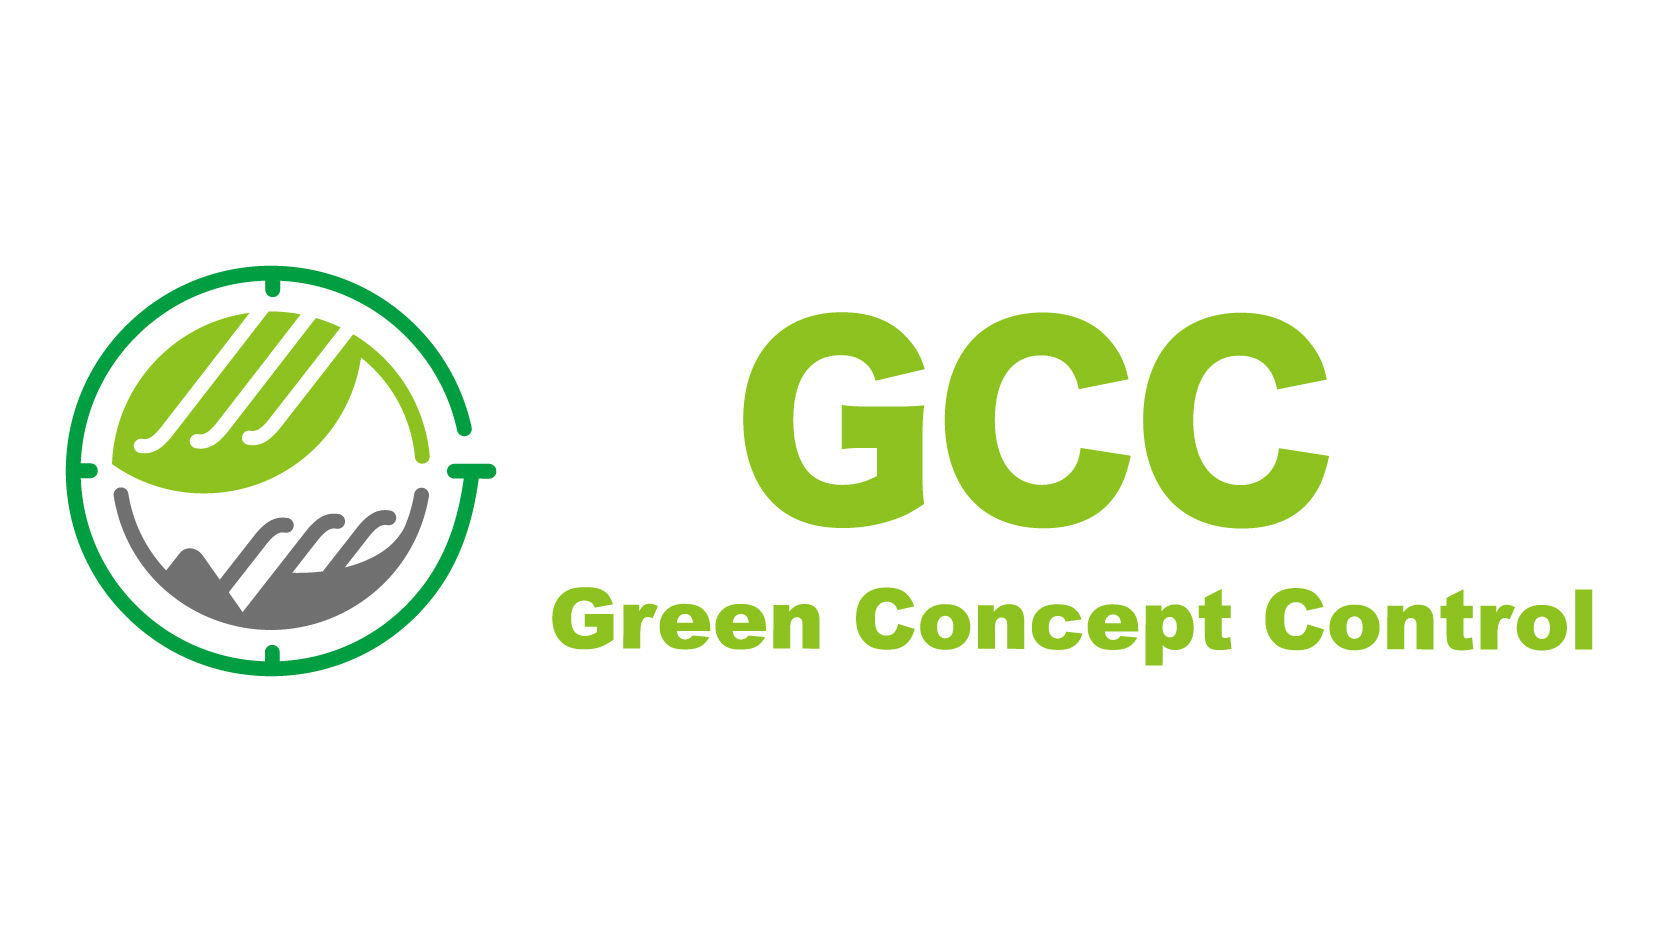 GCC Green Concept Control